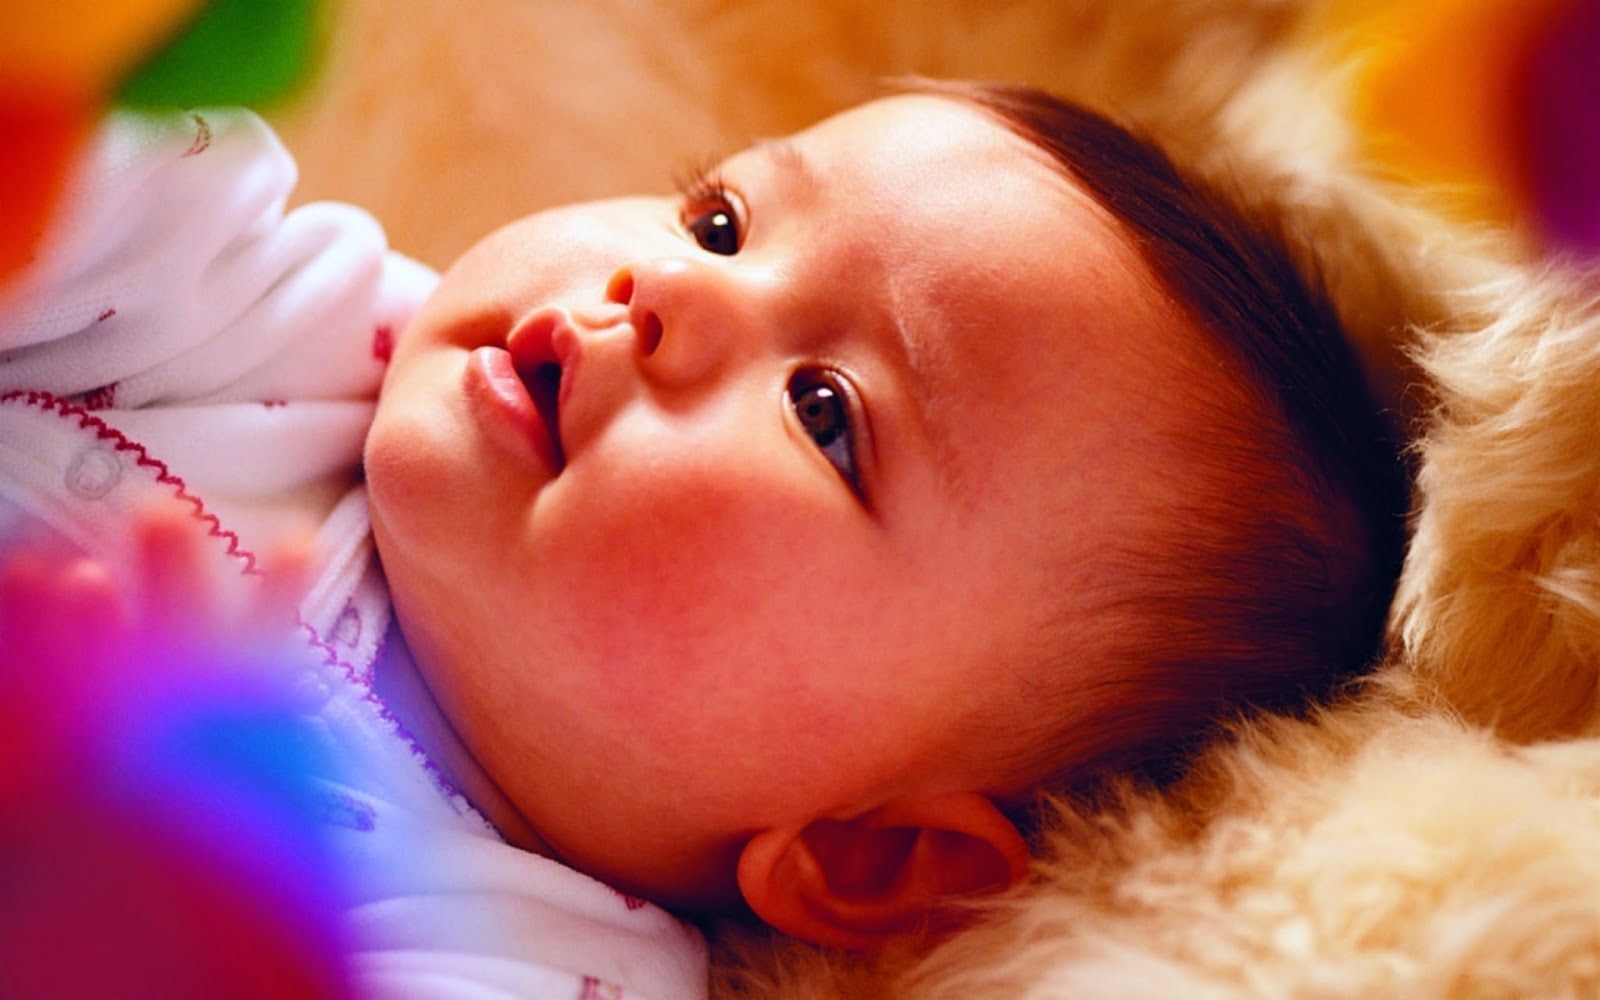 Cute Baby HD Wallpaper 2015 Cute Babies Wallpaper For Home. Cute baby wallpaper, Baby wallpaper hd, Cute baby picture